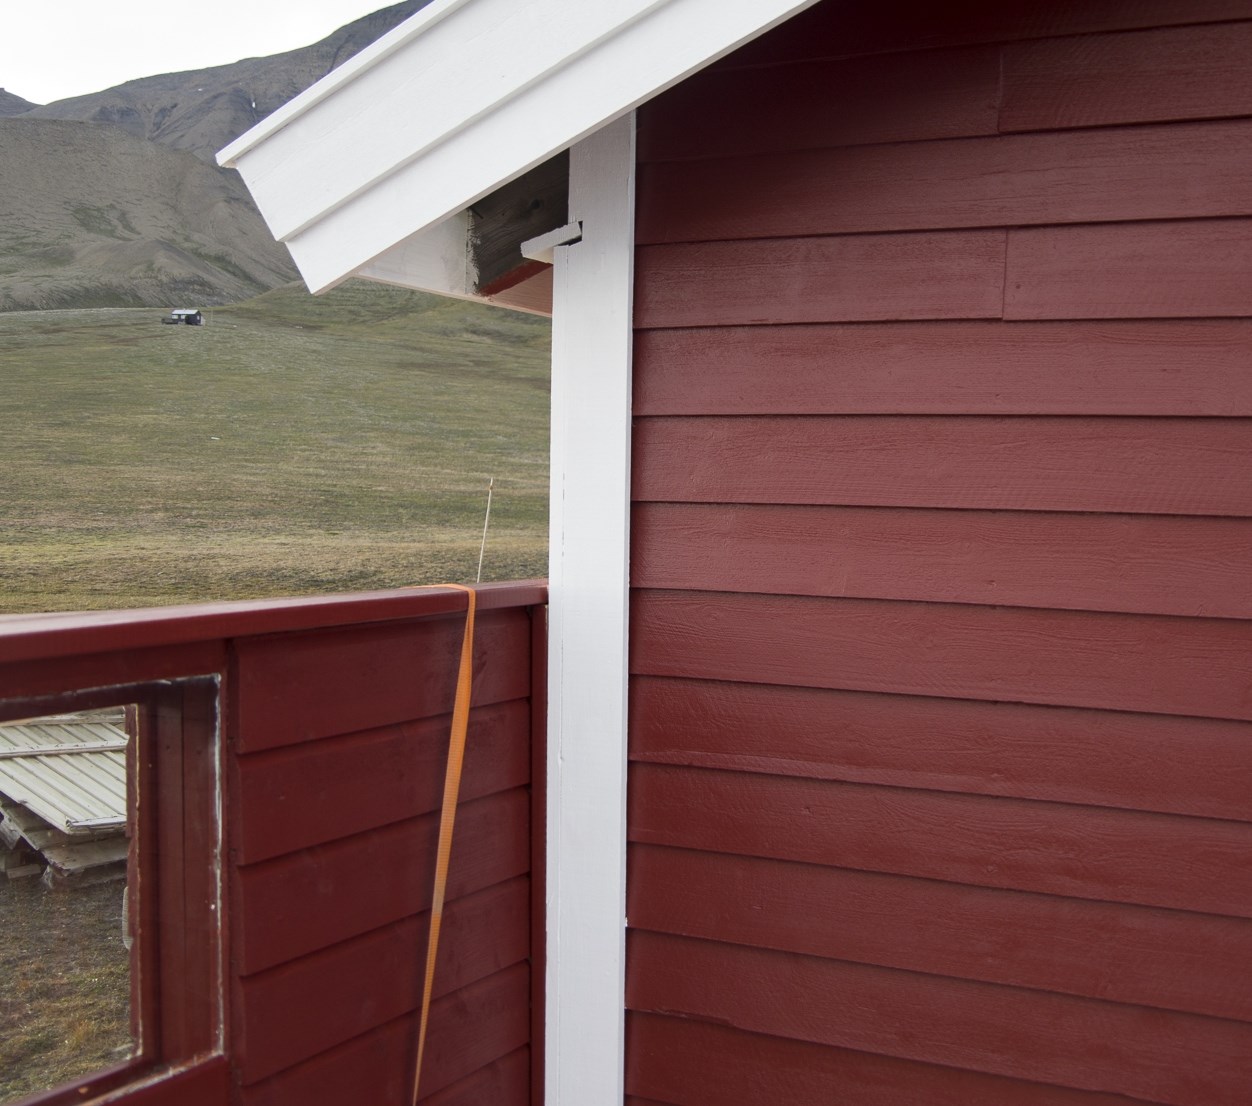 Drywood skal "teste" maling i arktis - Drywood_Svalbard (3 of 3).jpg - rubs